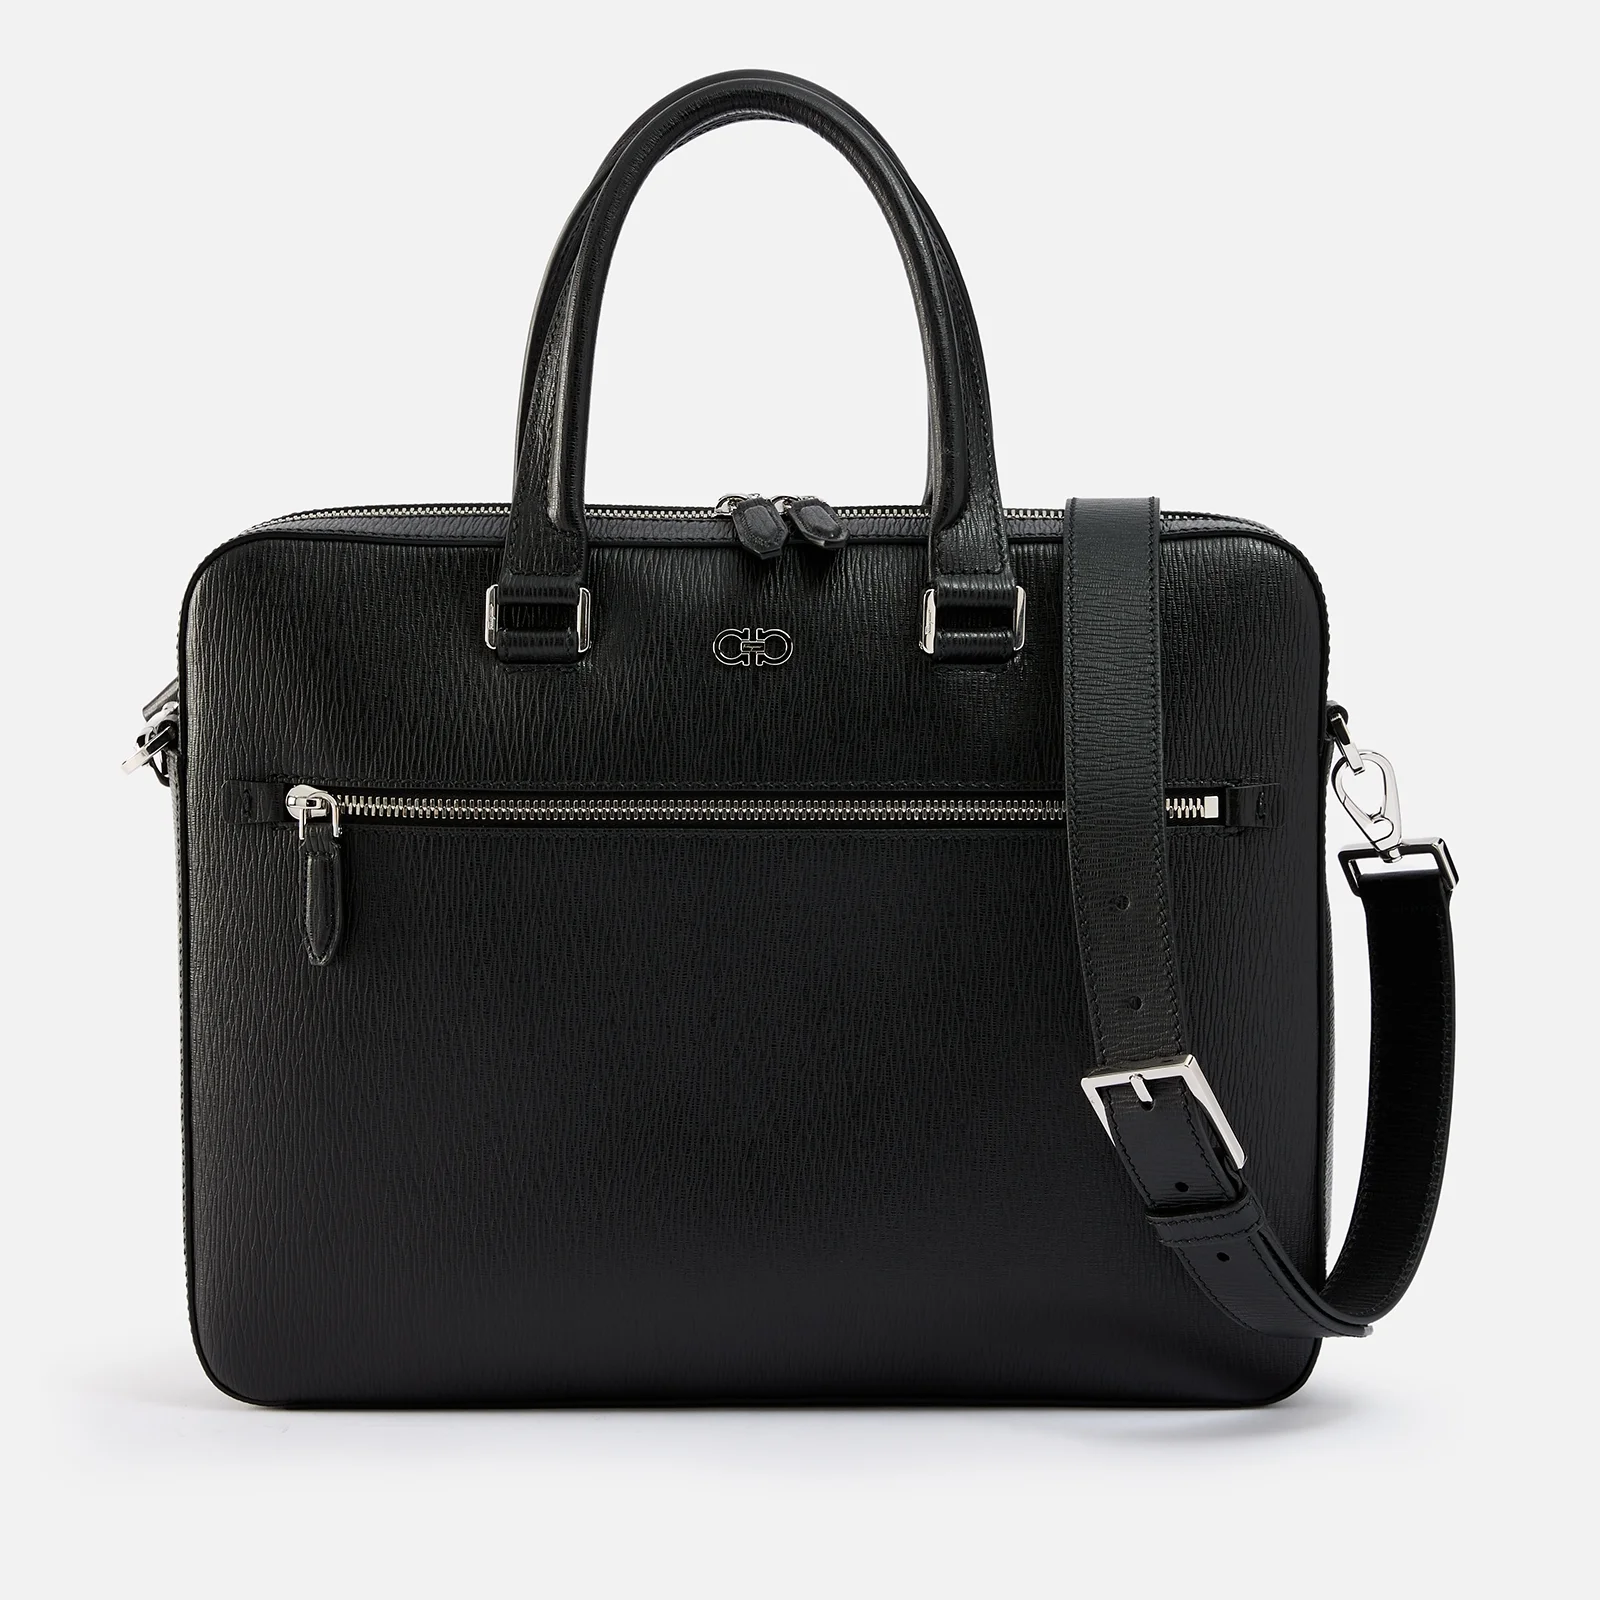 Ferragamo Textured Leather Briefcase Image 1